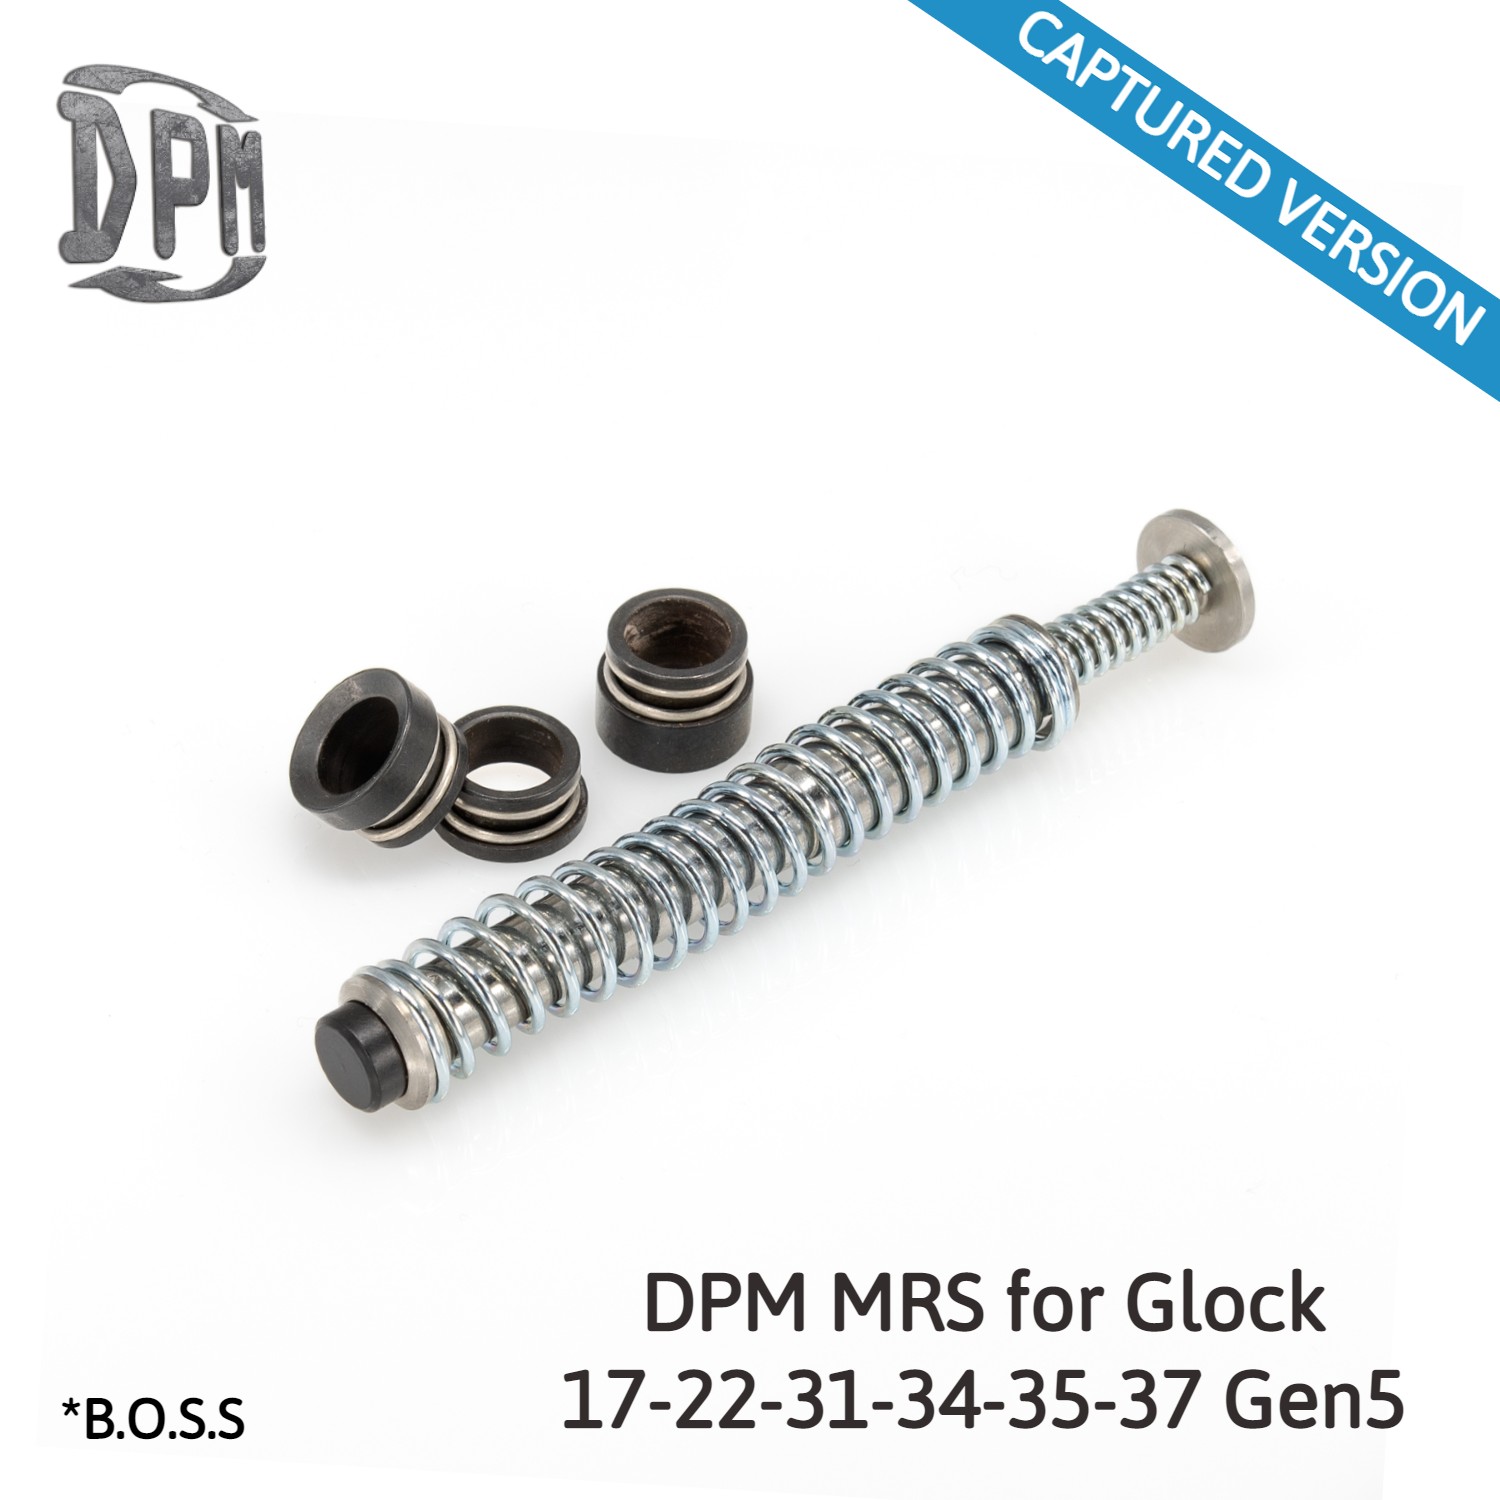 1-DPM-MRS-for-Glock-17-22-31-34-35-37-Gen5-Captured-Version